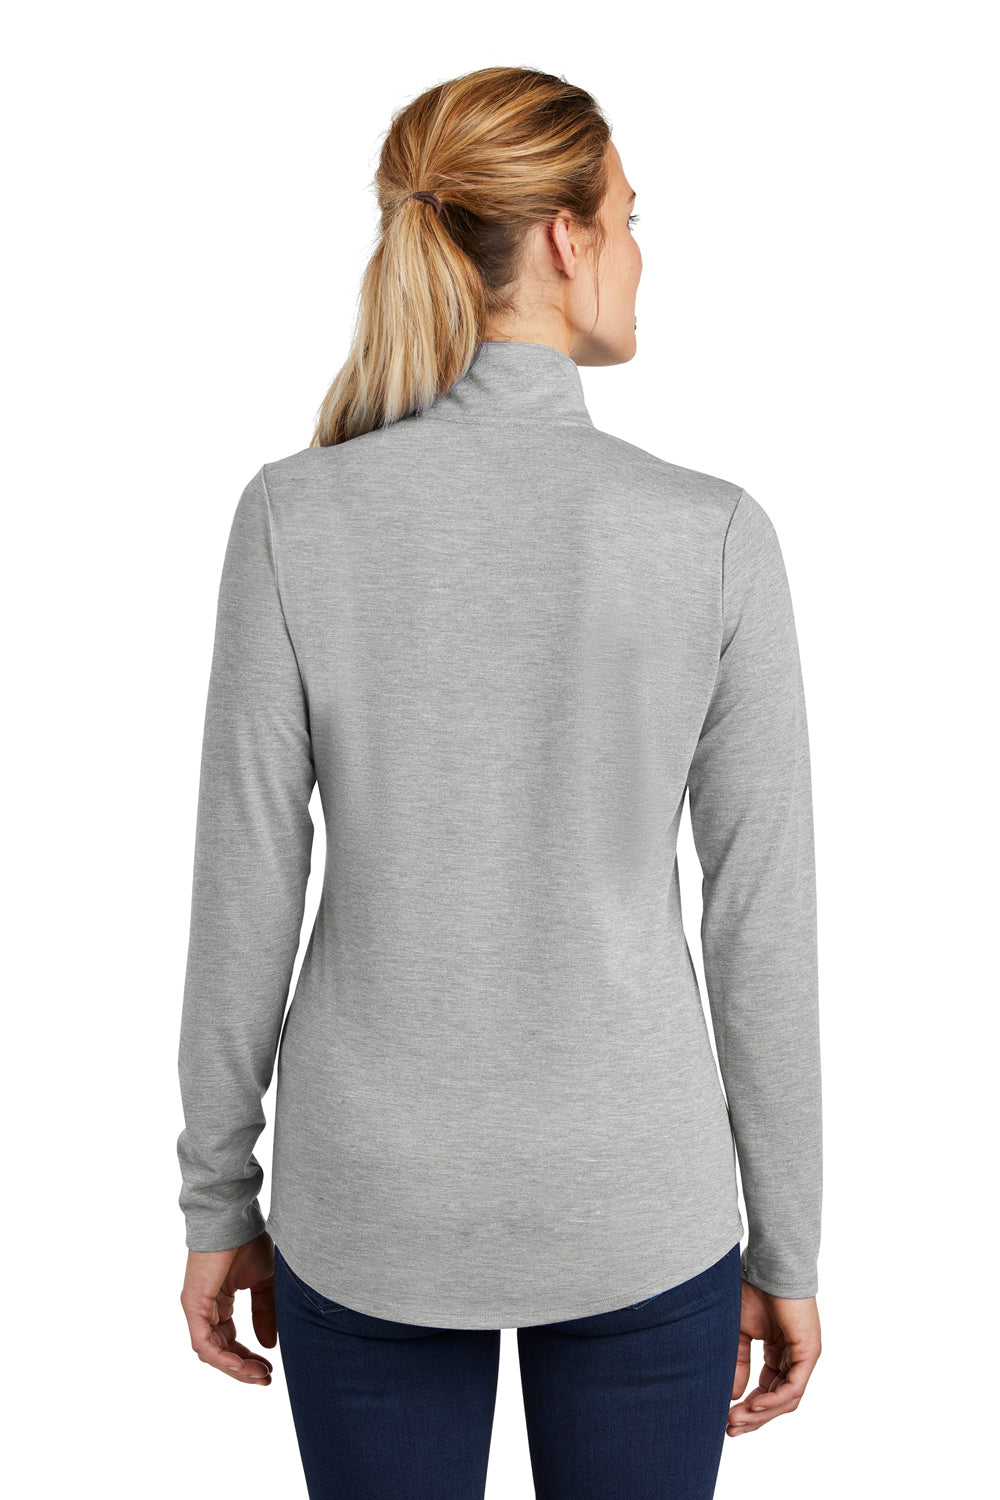 Sport-Tek LST407 Womens Moisture Wicking 1/4 Zip Sweatshirt Light Grey Back